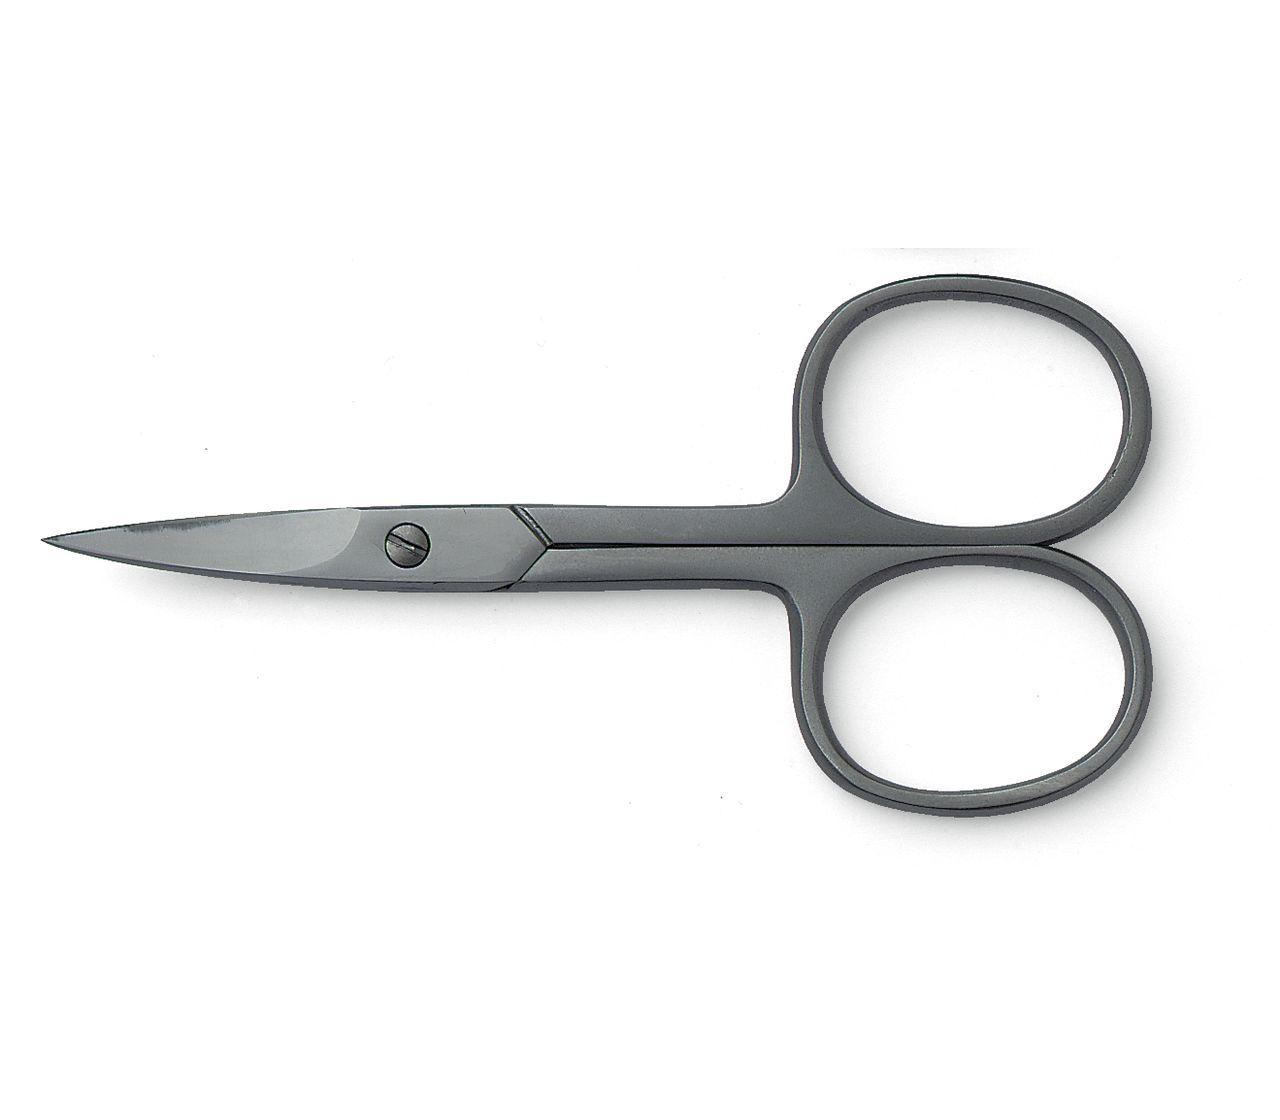 Curved Cuticle Scissors for Men Women Multi Purpose Small Manicure